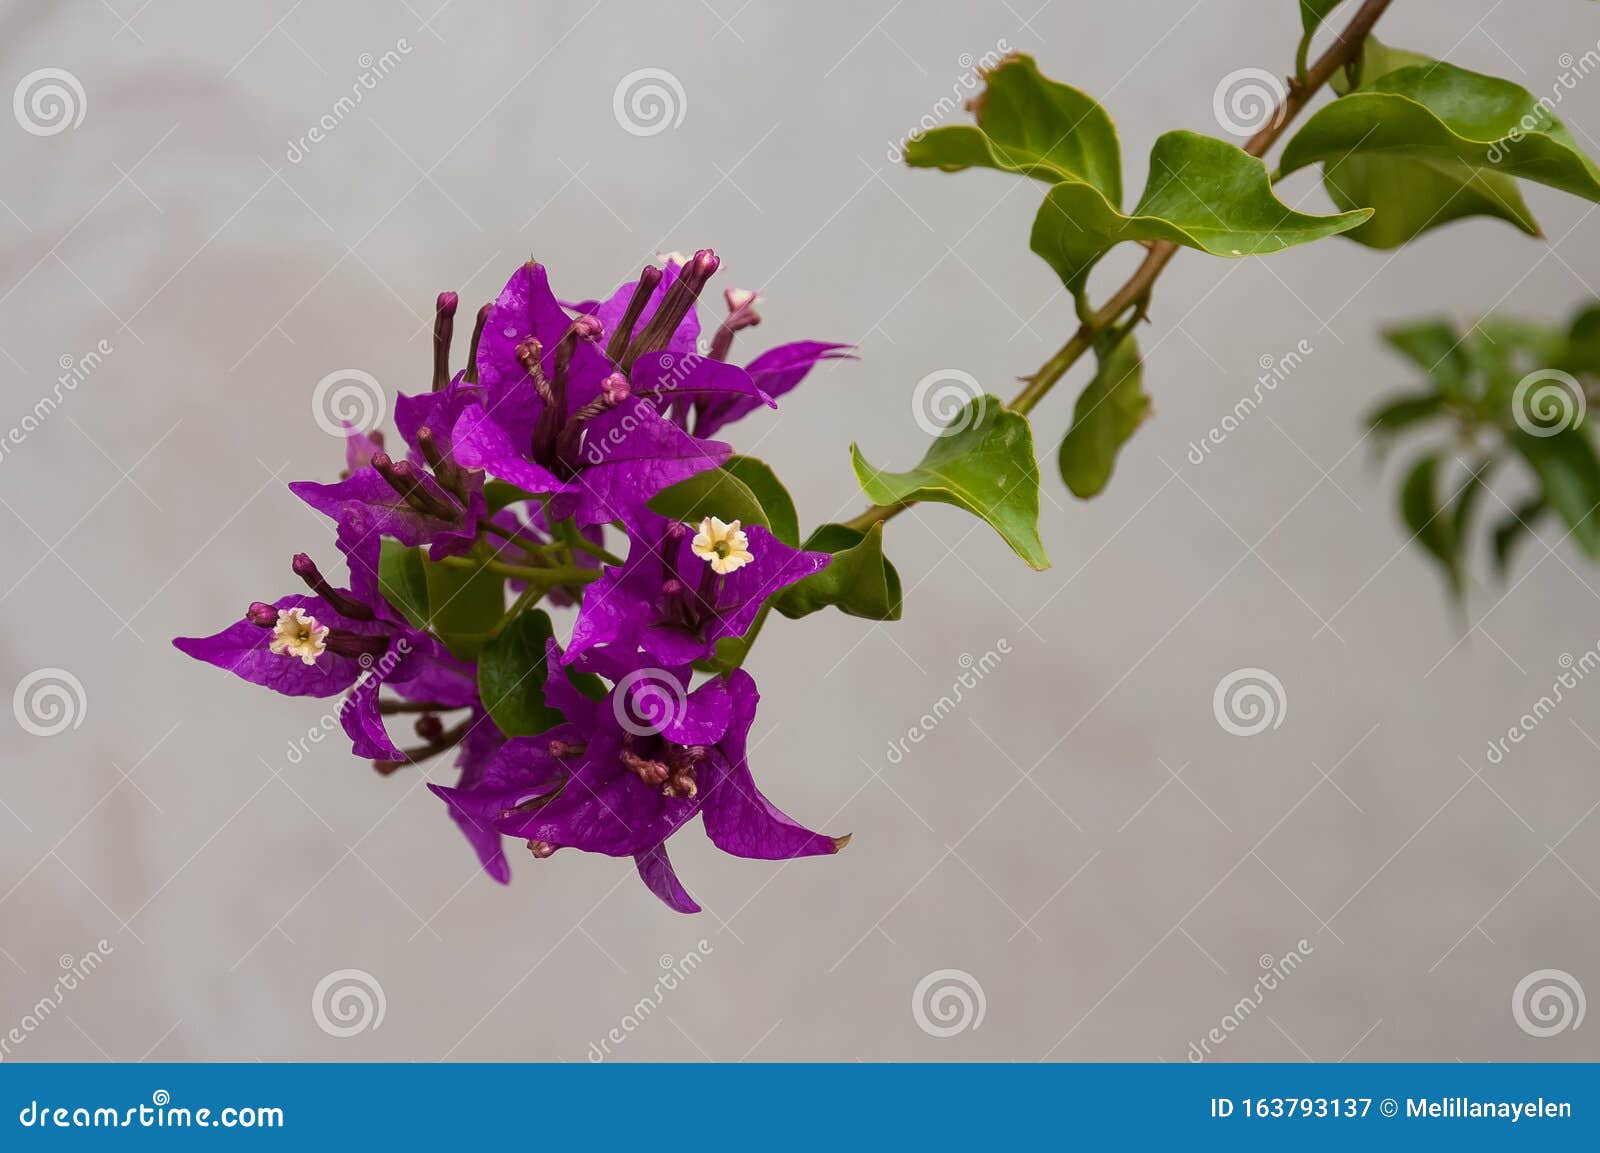 Violet De Bougainvillier Au Pistil Jaune Image stock - Image du pistils,  violette: 163793137